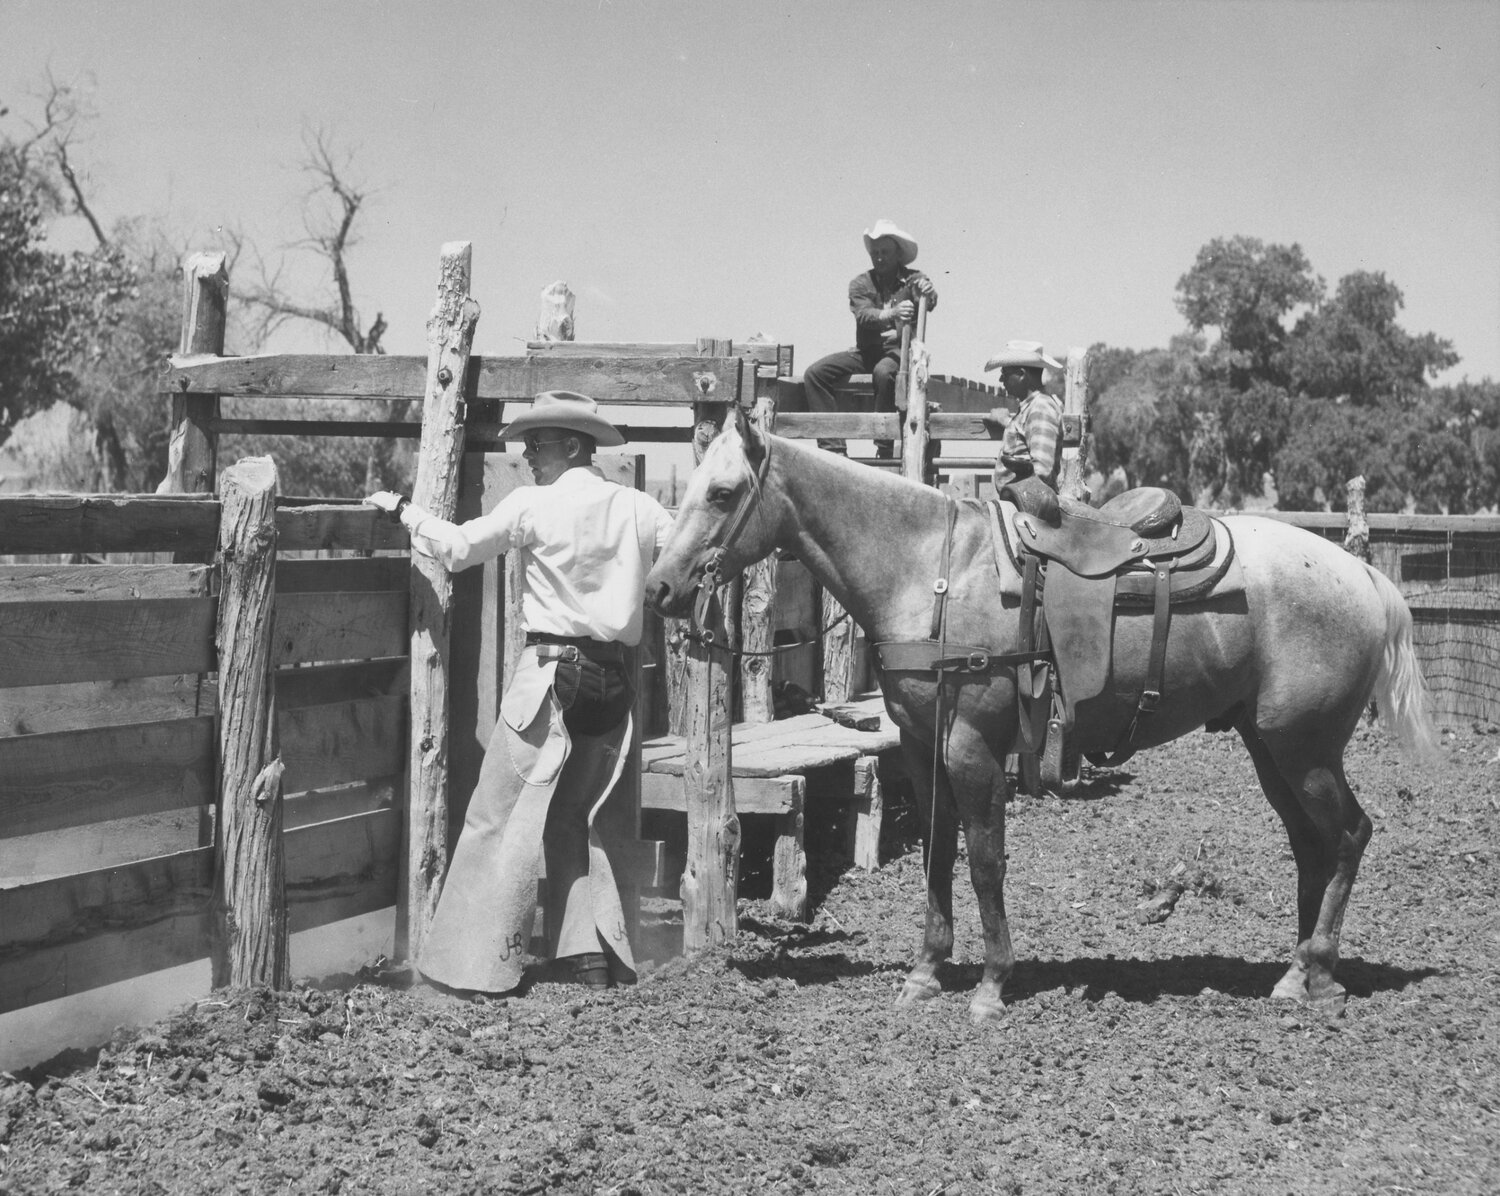 Jack Bates working on the Koontz Ranch, 1950s.